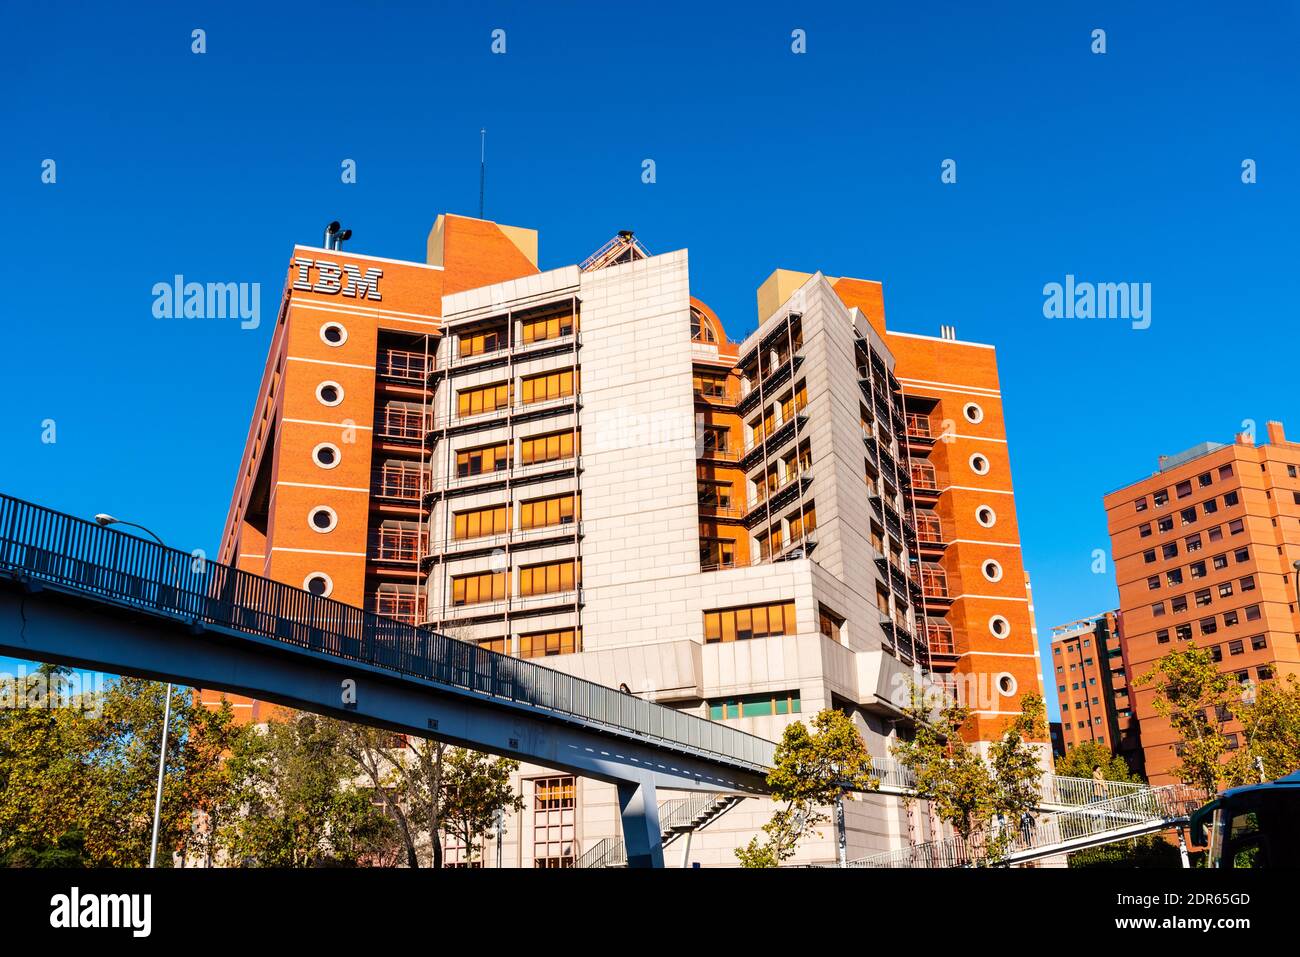 Madrid, Spain - Novemeber 10, 2020: IBM technology company headquarters in Madrid. View against blue sky Stock Photo